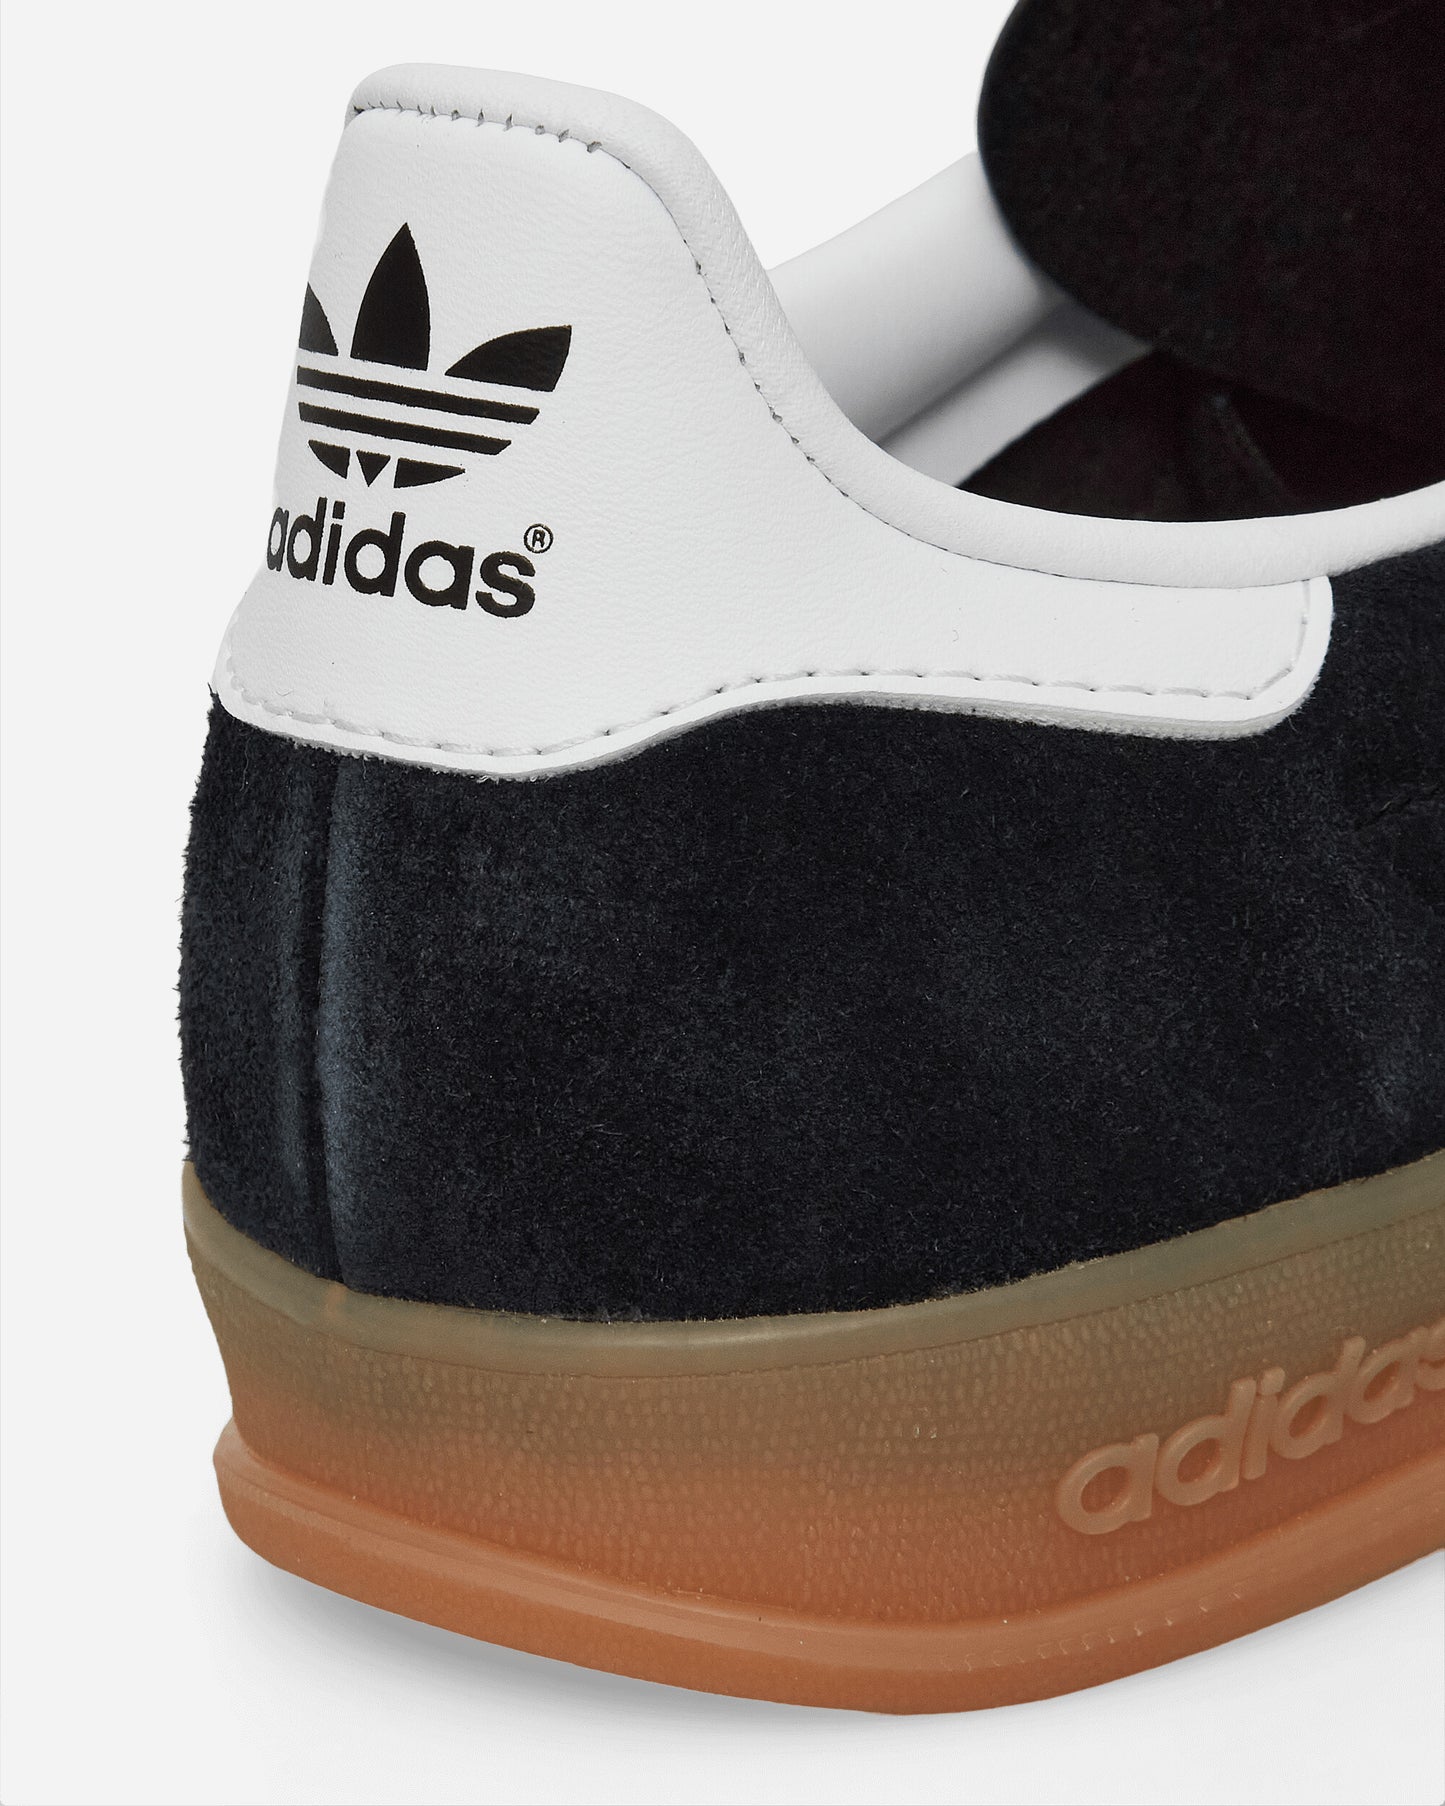 adidas Gazelle Indoor Core Black/Ftwr White Sneakers Low JI2060